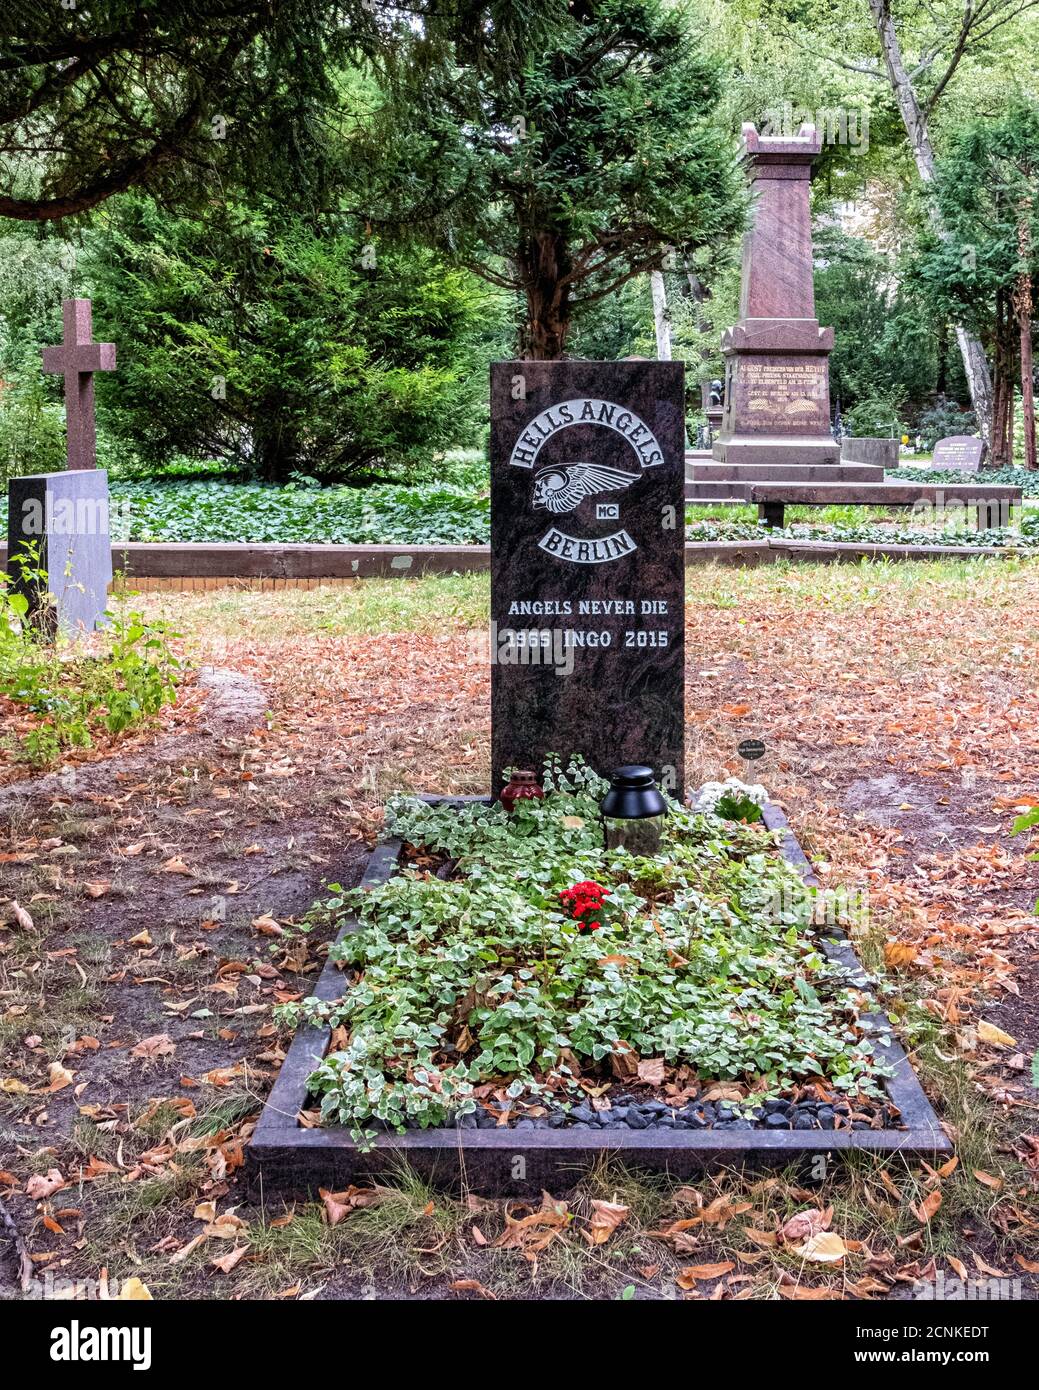 Alter St. Matthäus Kirchhof .Old Saint Matthew's Cemetery,Schöneberg-Berlin. Grave of a Hells Angel, Ingo 1965-2015 Stock Photo